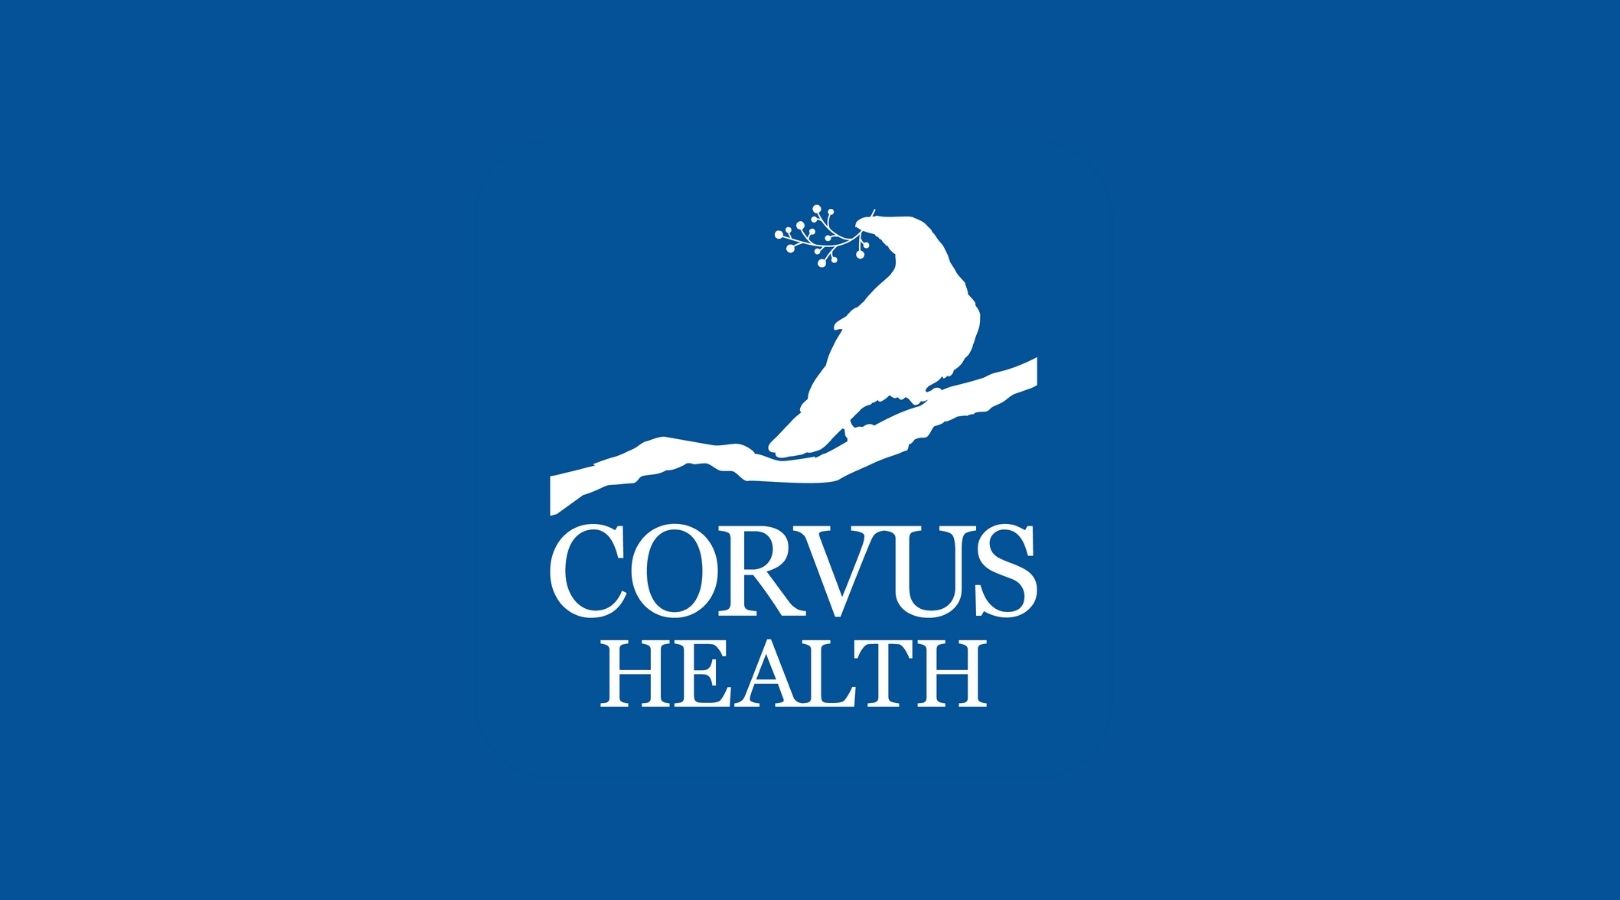 Job Vacancy: Corvus Health is recruiting a Pediatric ICU Physician for Premier Private Children’s Hospital in Nairobi, Kenya